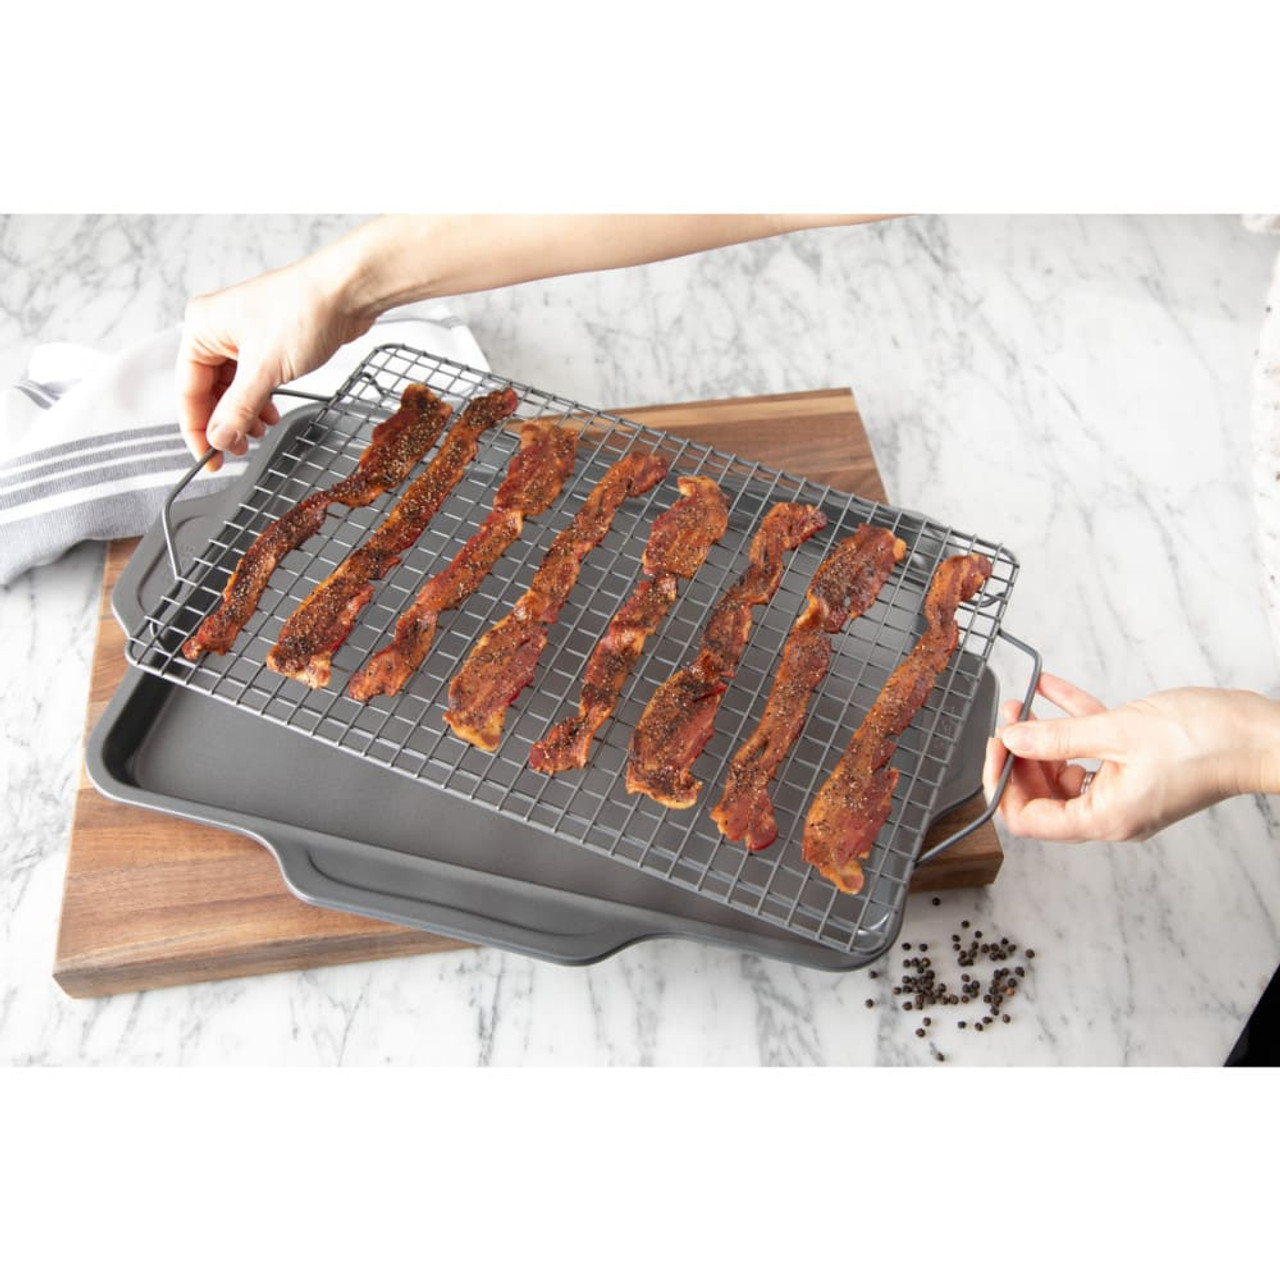 All-Clad Nonstick Pro-Release 5-Piece Bakeware Set